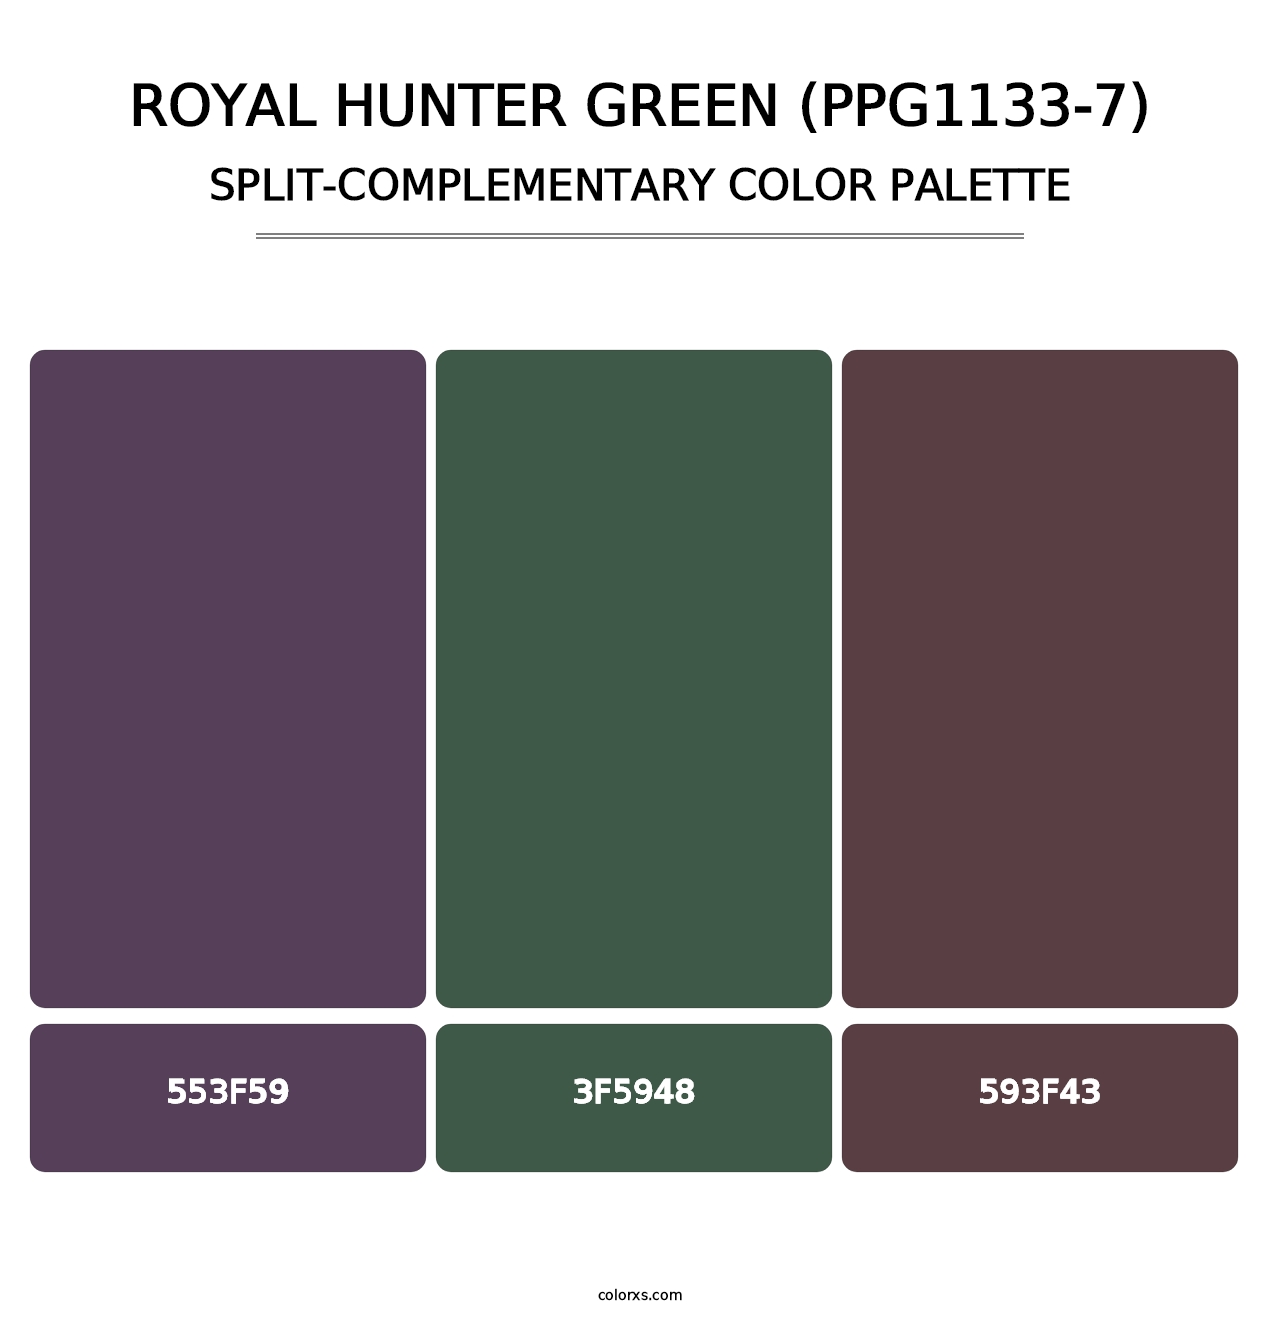 Royal Hunter Green (PPG1133-7) - Split-Complementary Color Palette